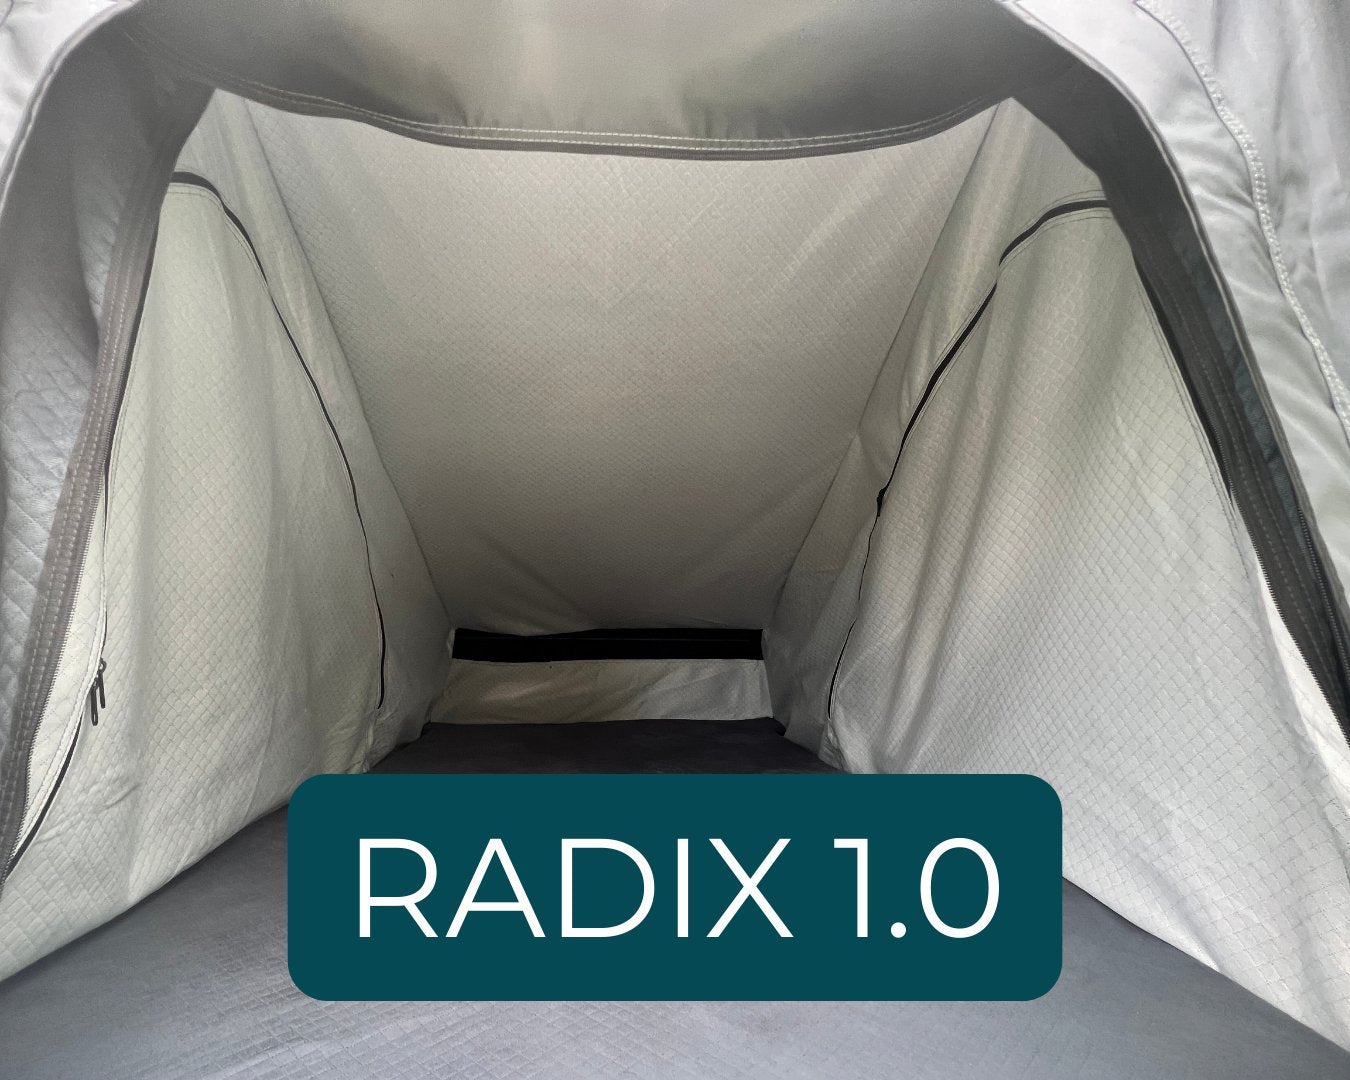 Thermo Innenzelt | Radix XL - ARCTA